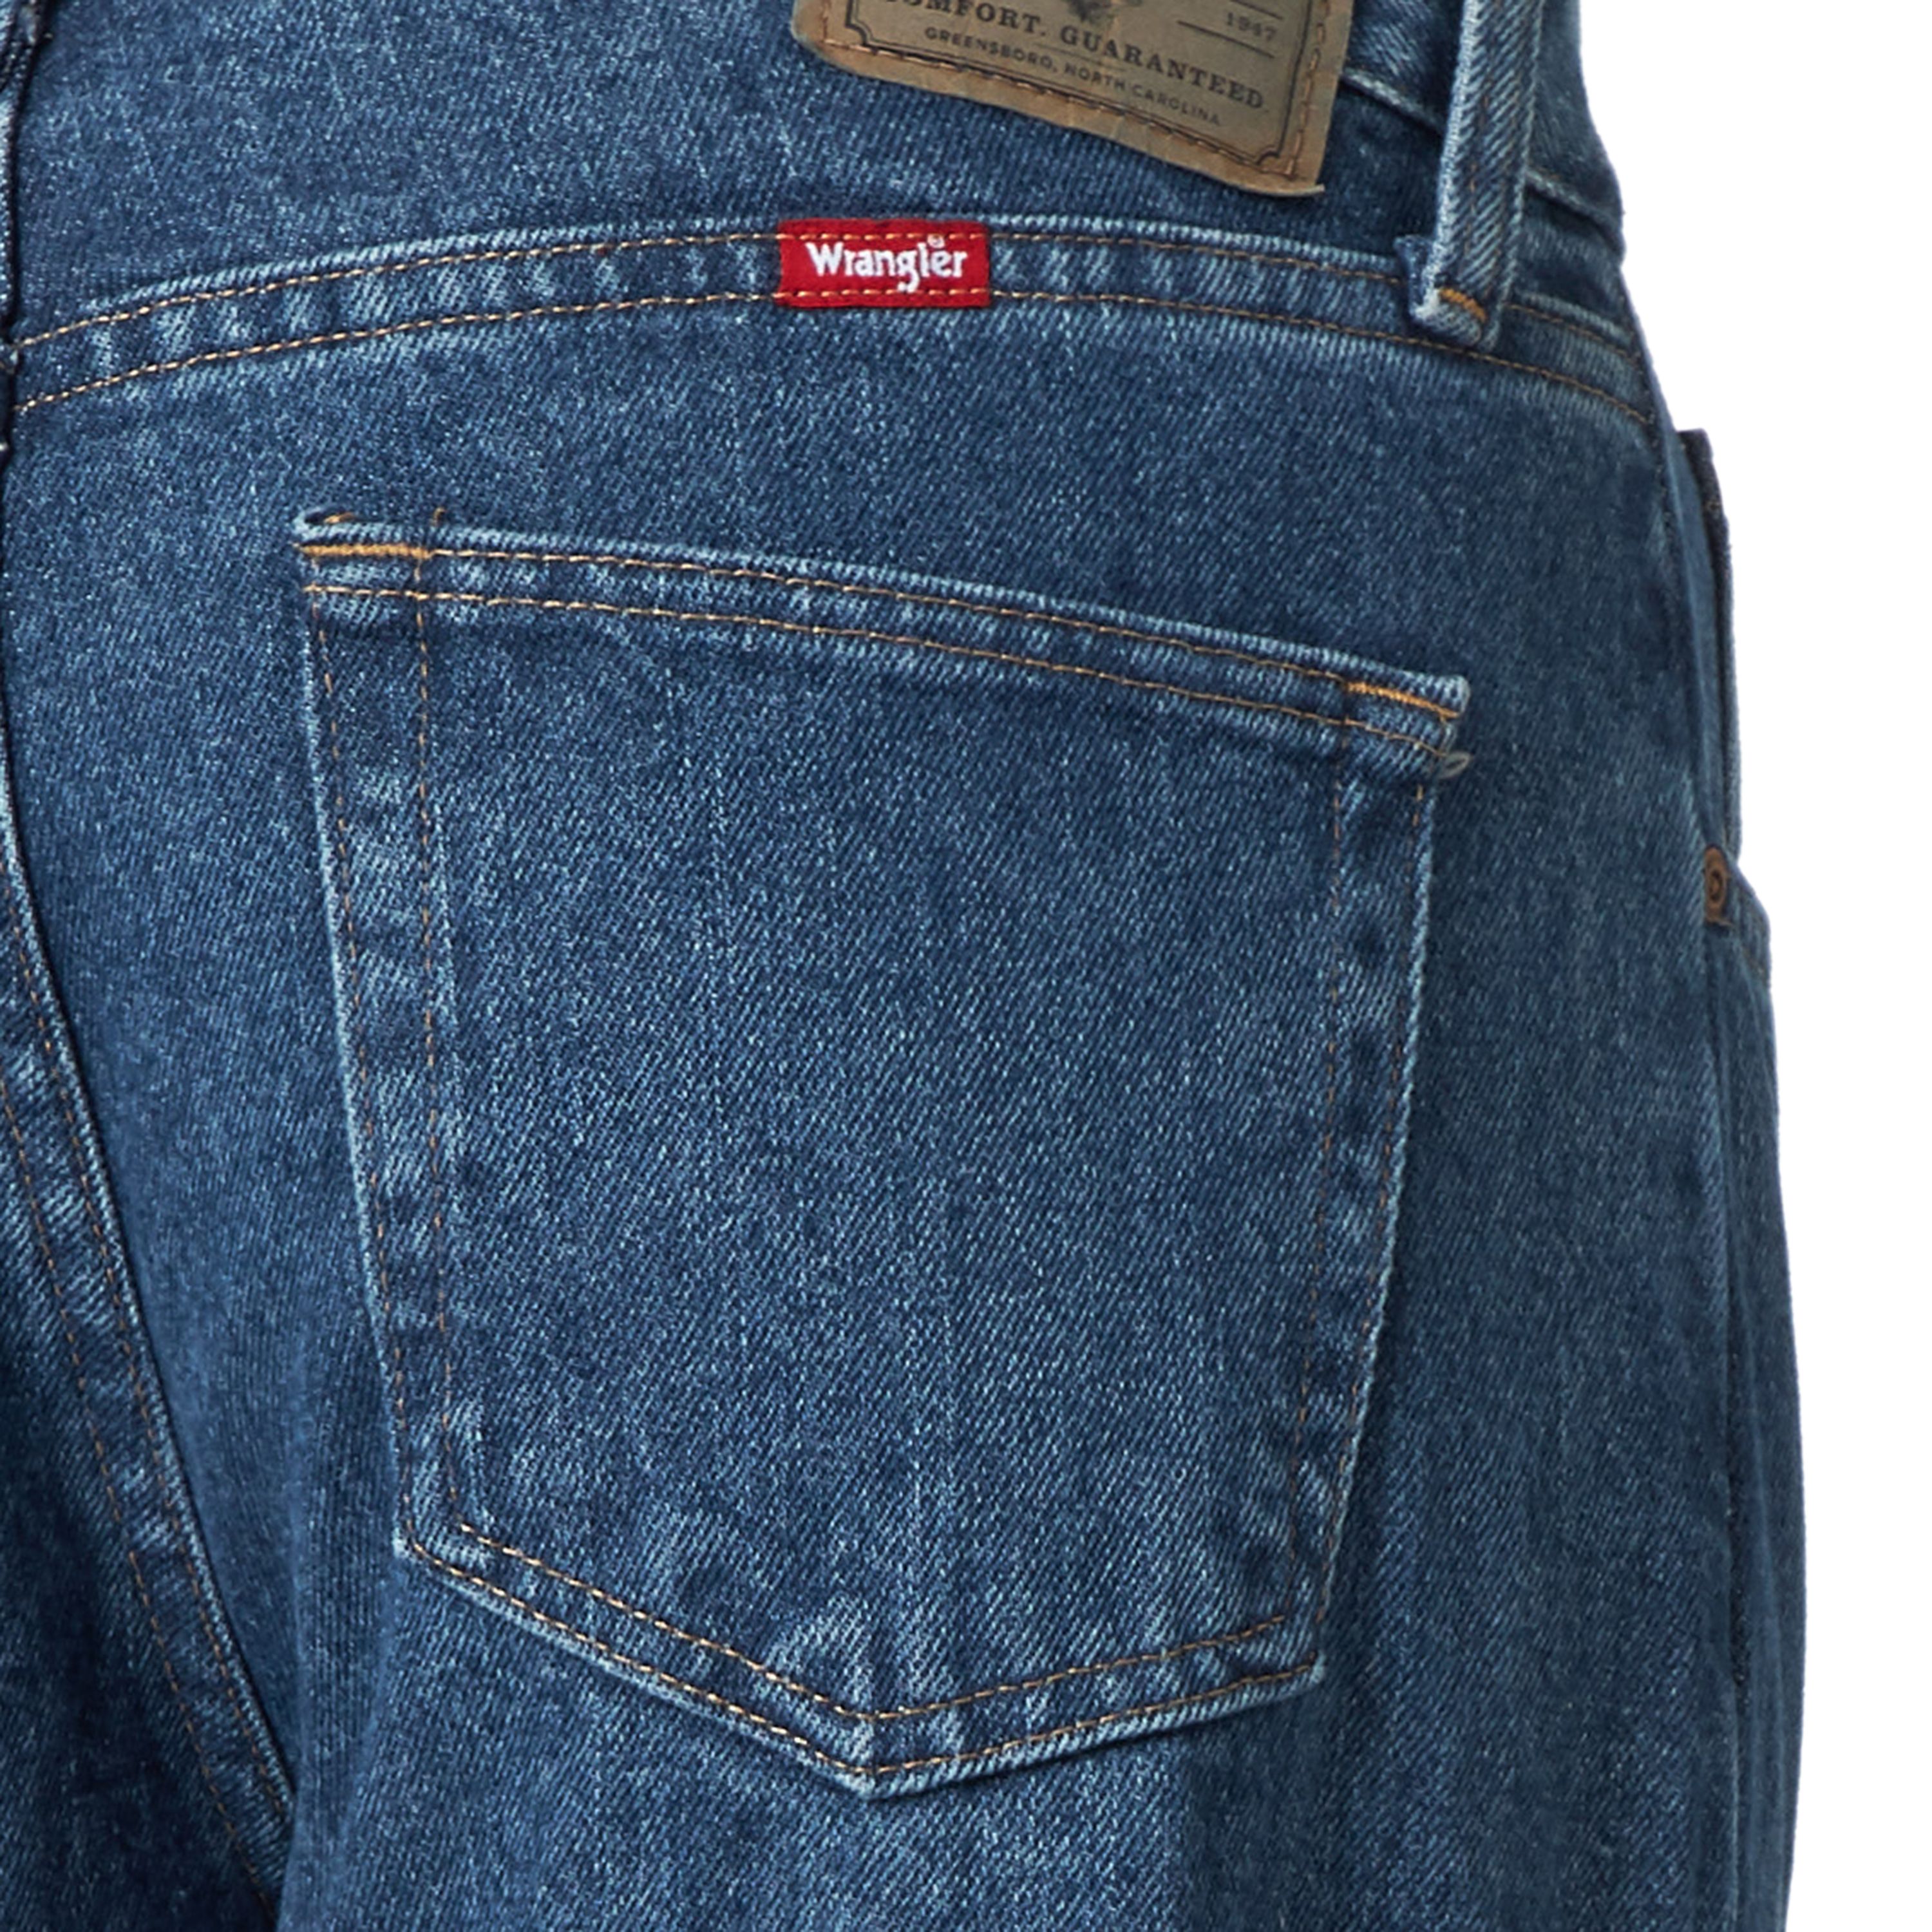 Wrangler Men's and Big Men's Regular Fit Jeans - image 4 of 5